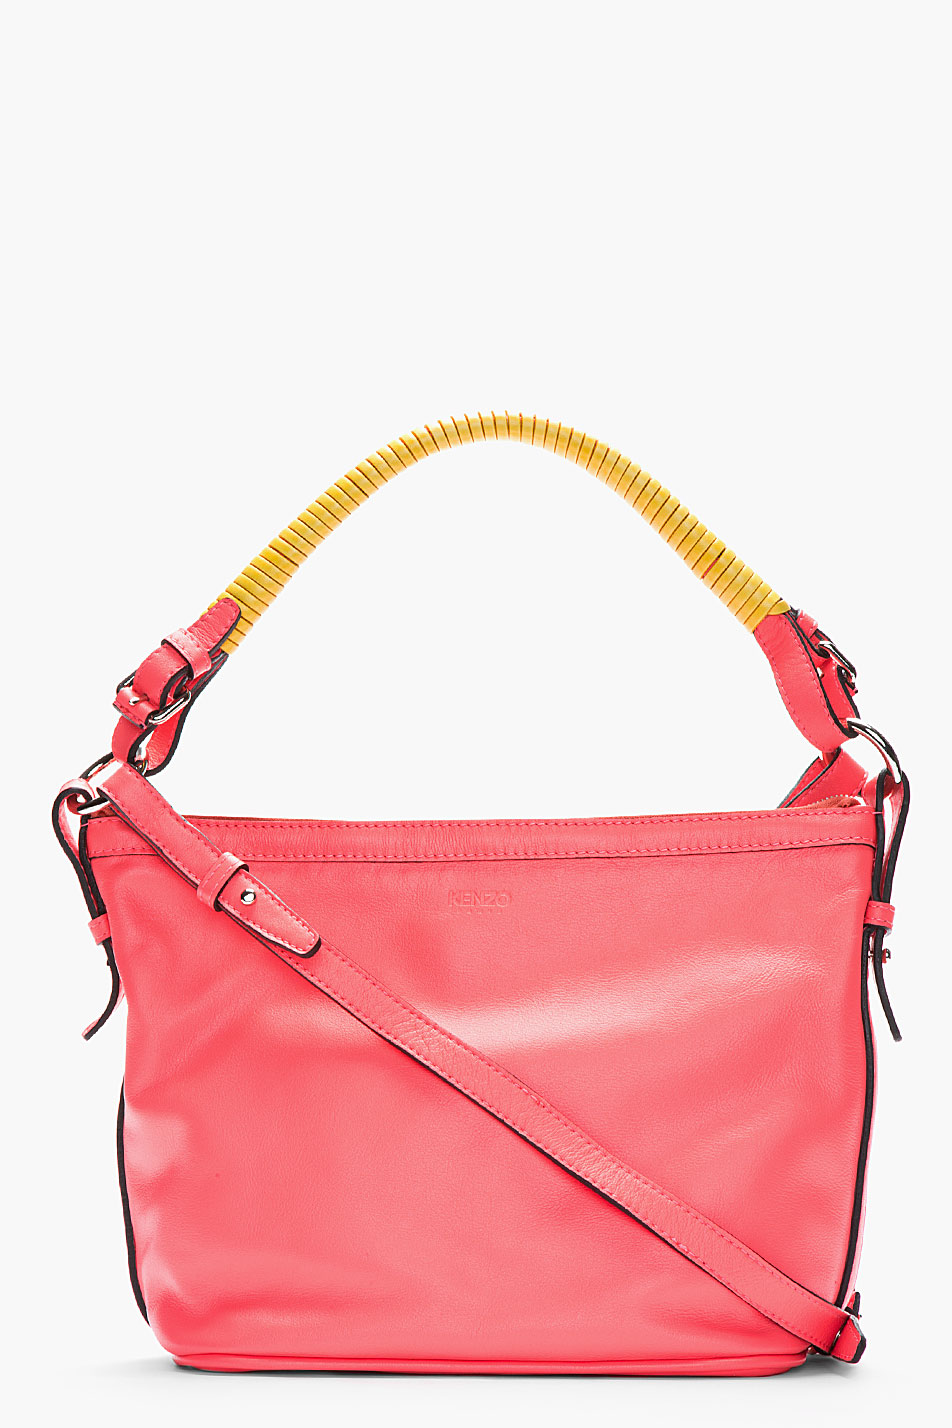 Kenzo Hot Pink Leather Convertiblestrap Shoulder Bag in Pink | Lyst